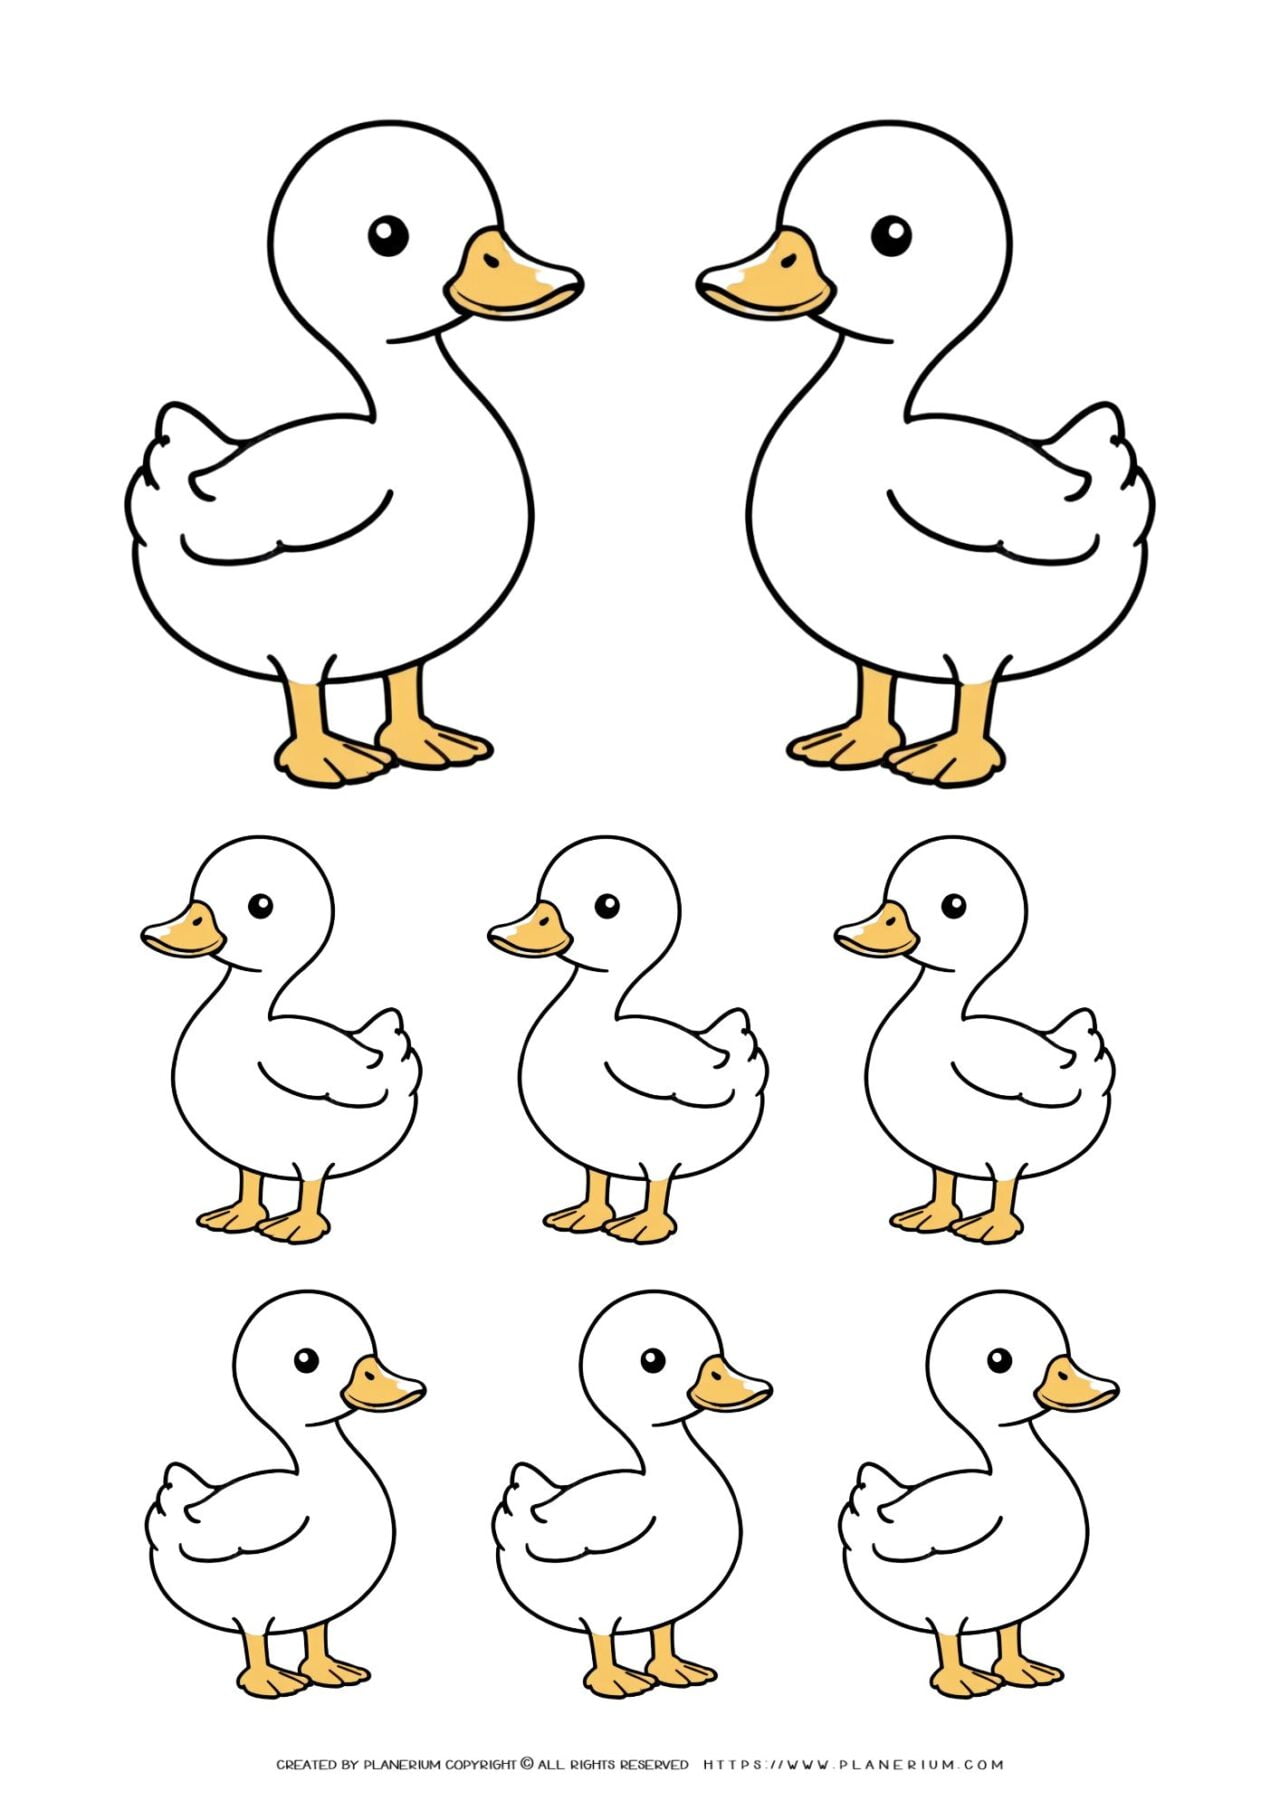 Illustration of multiple cartoon ducks.